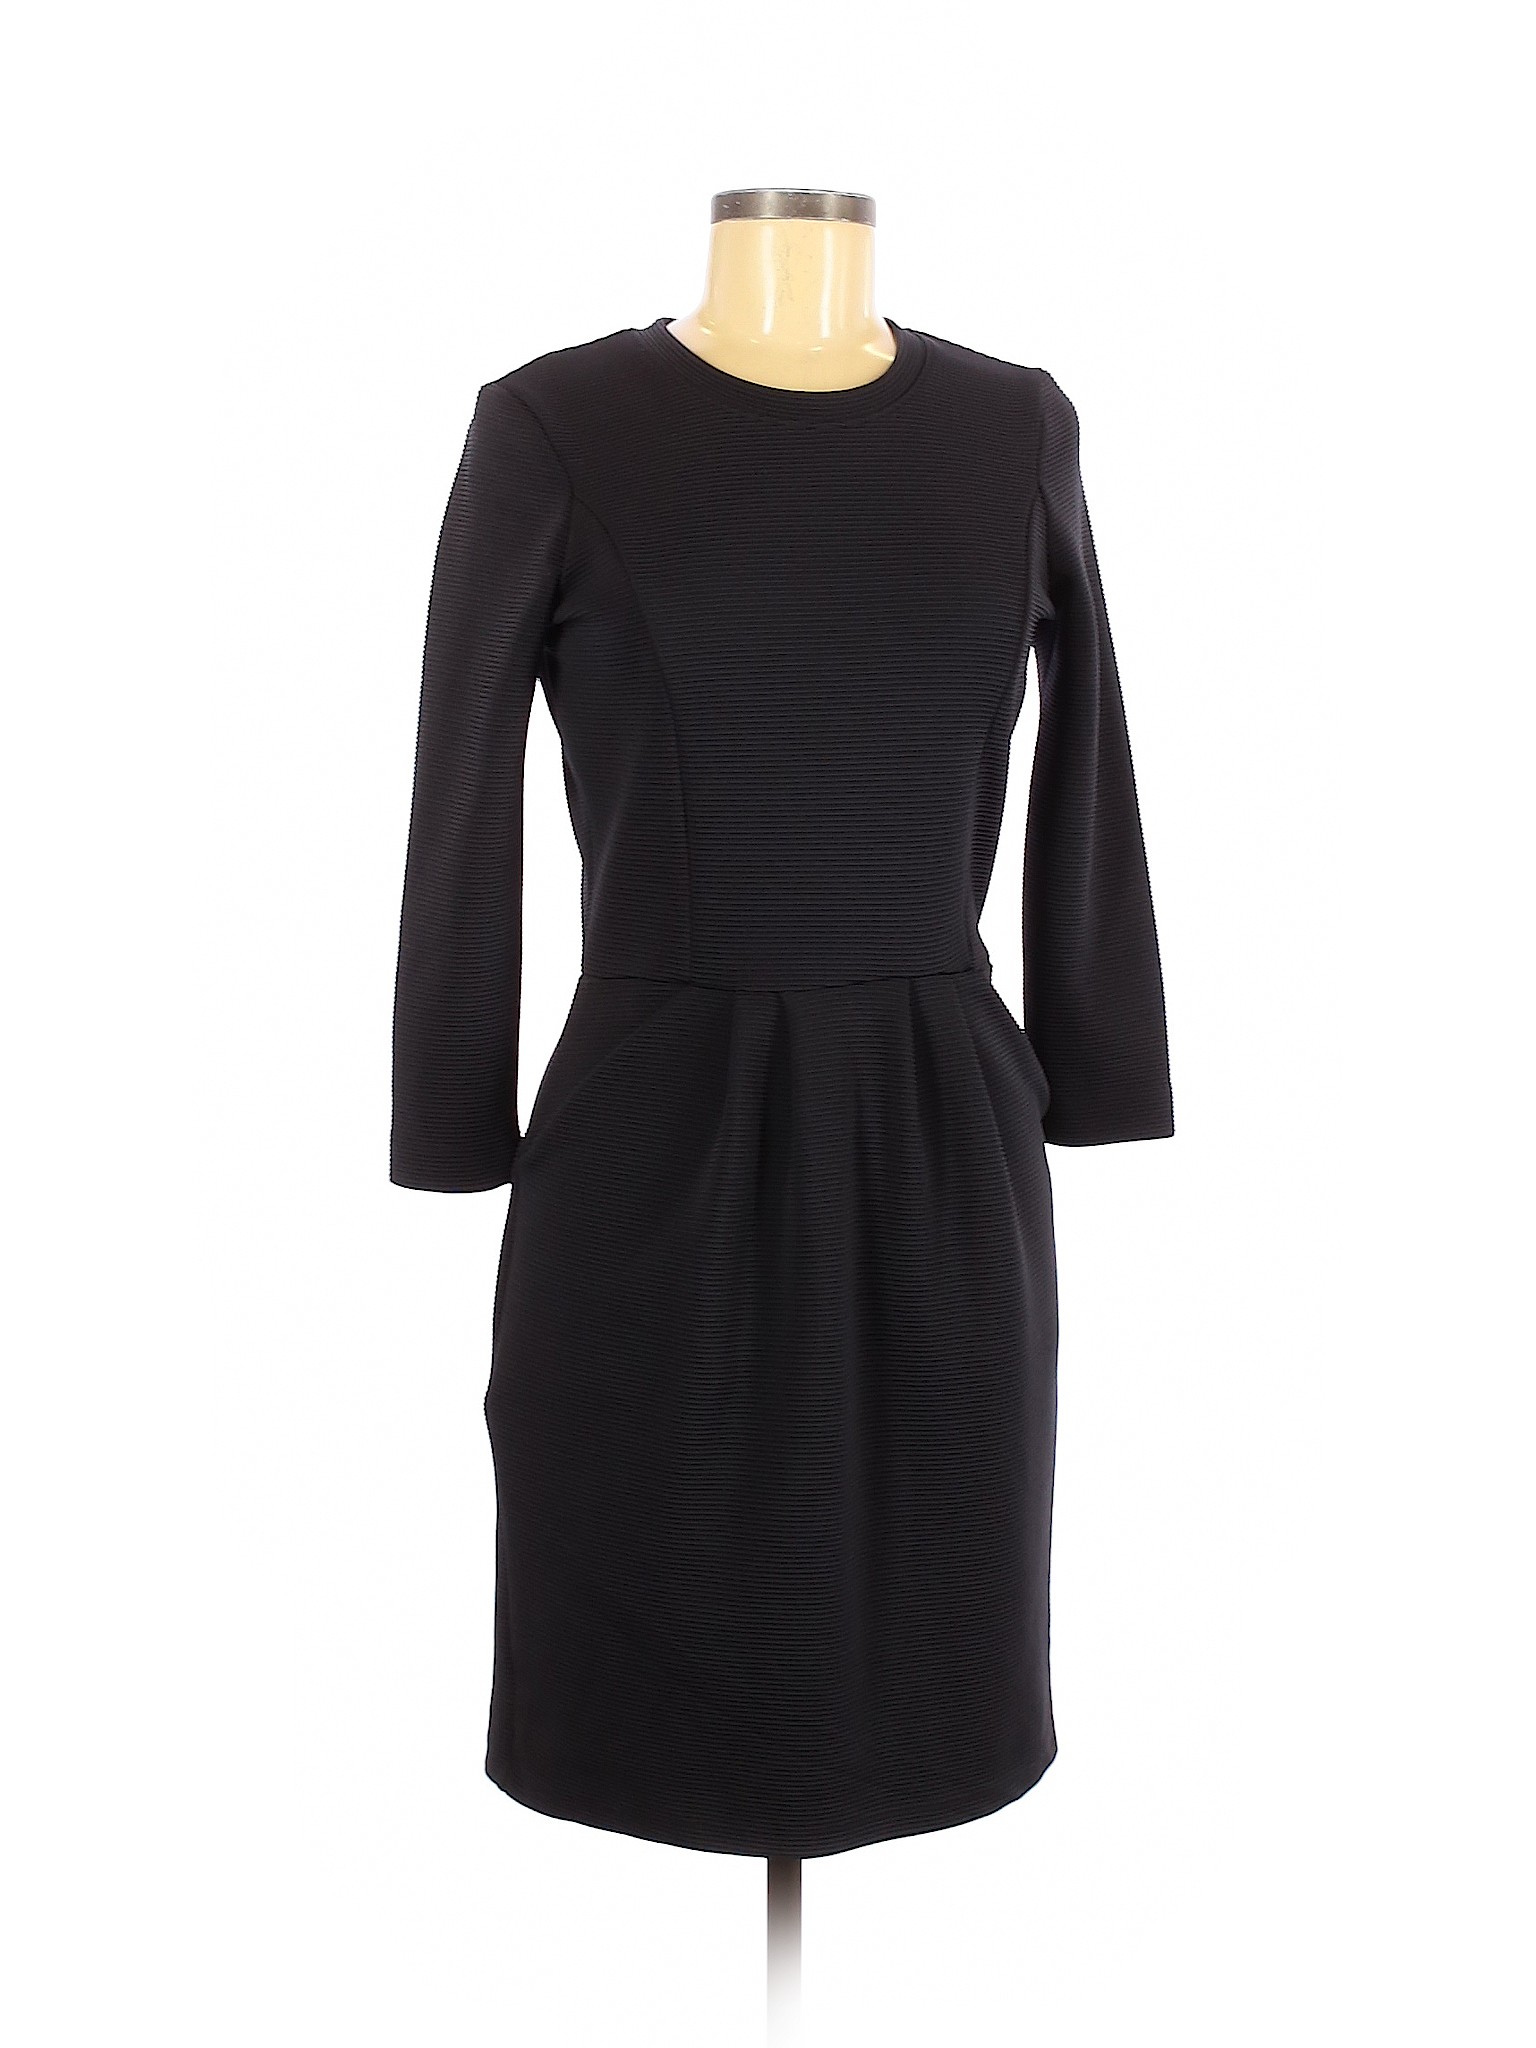 HOBBs Women Black Casual Dress S | eBay